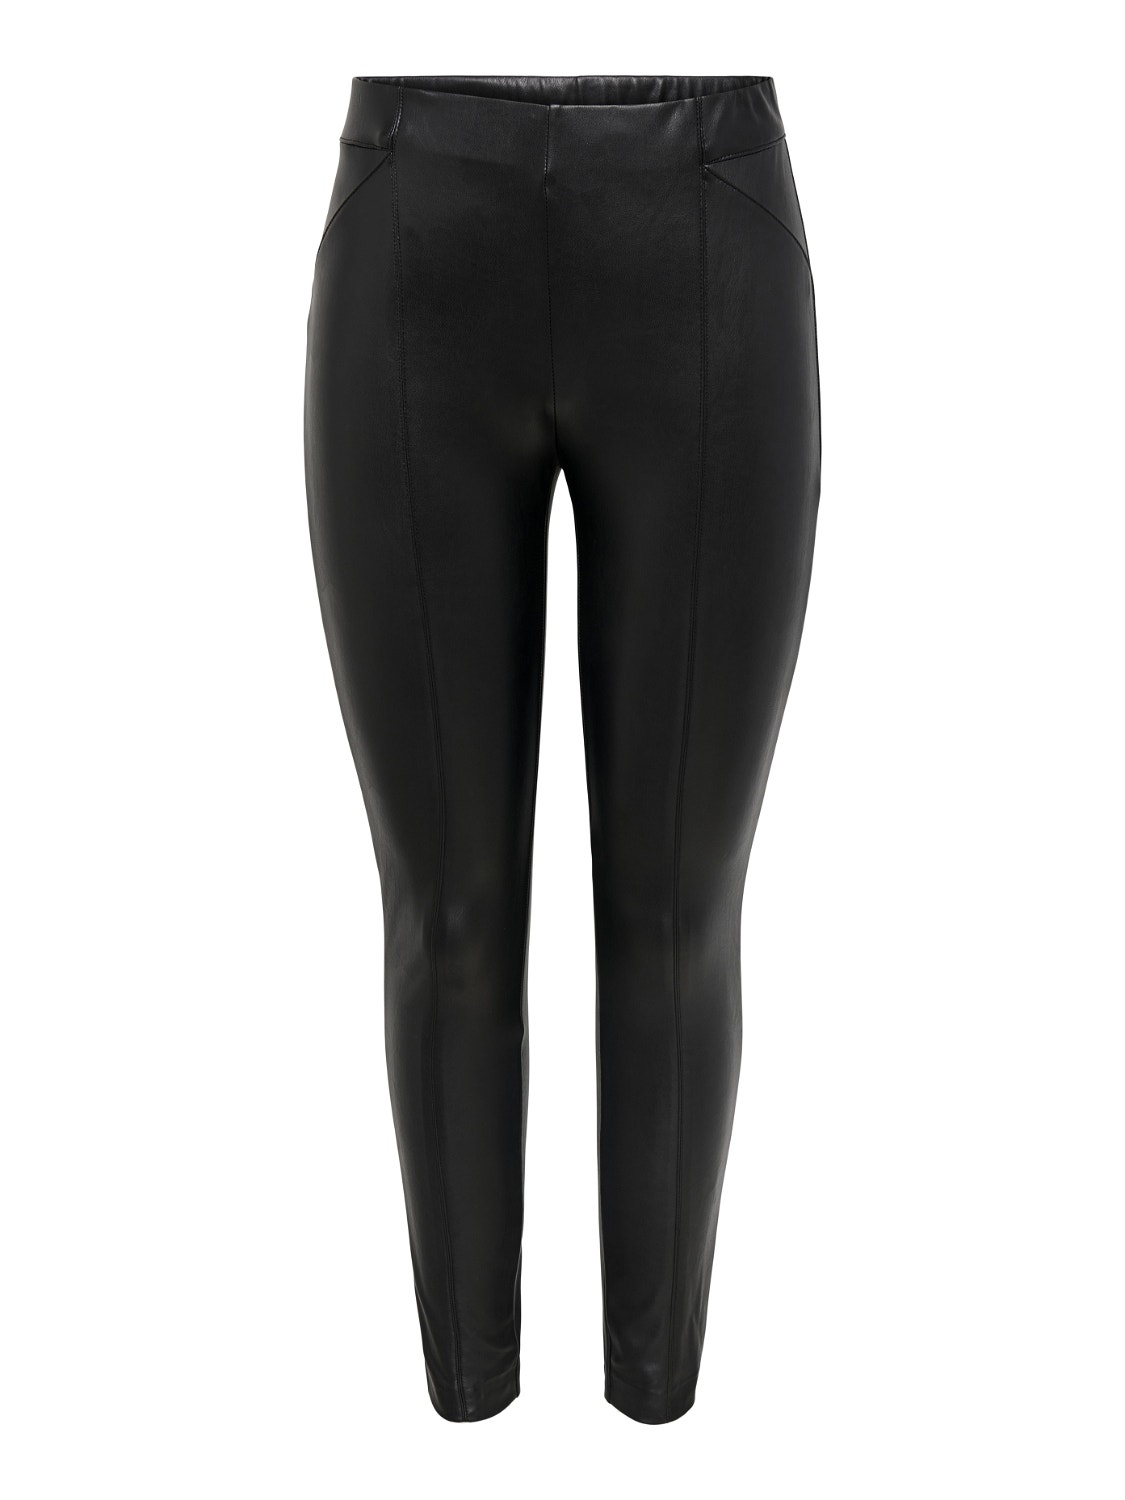 ONLY 3 PACK - Leggings - Trousers - schwarz (black)/black - Zalando.de